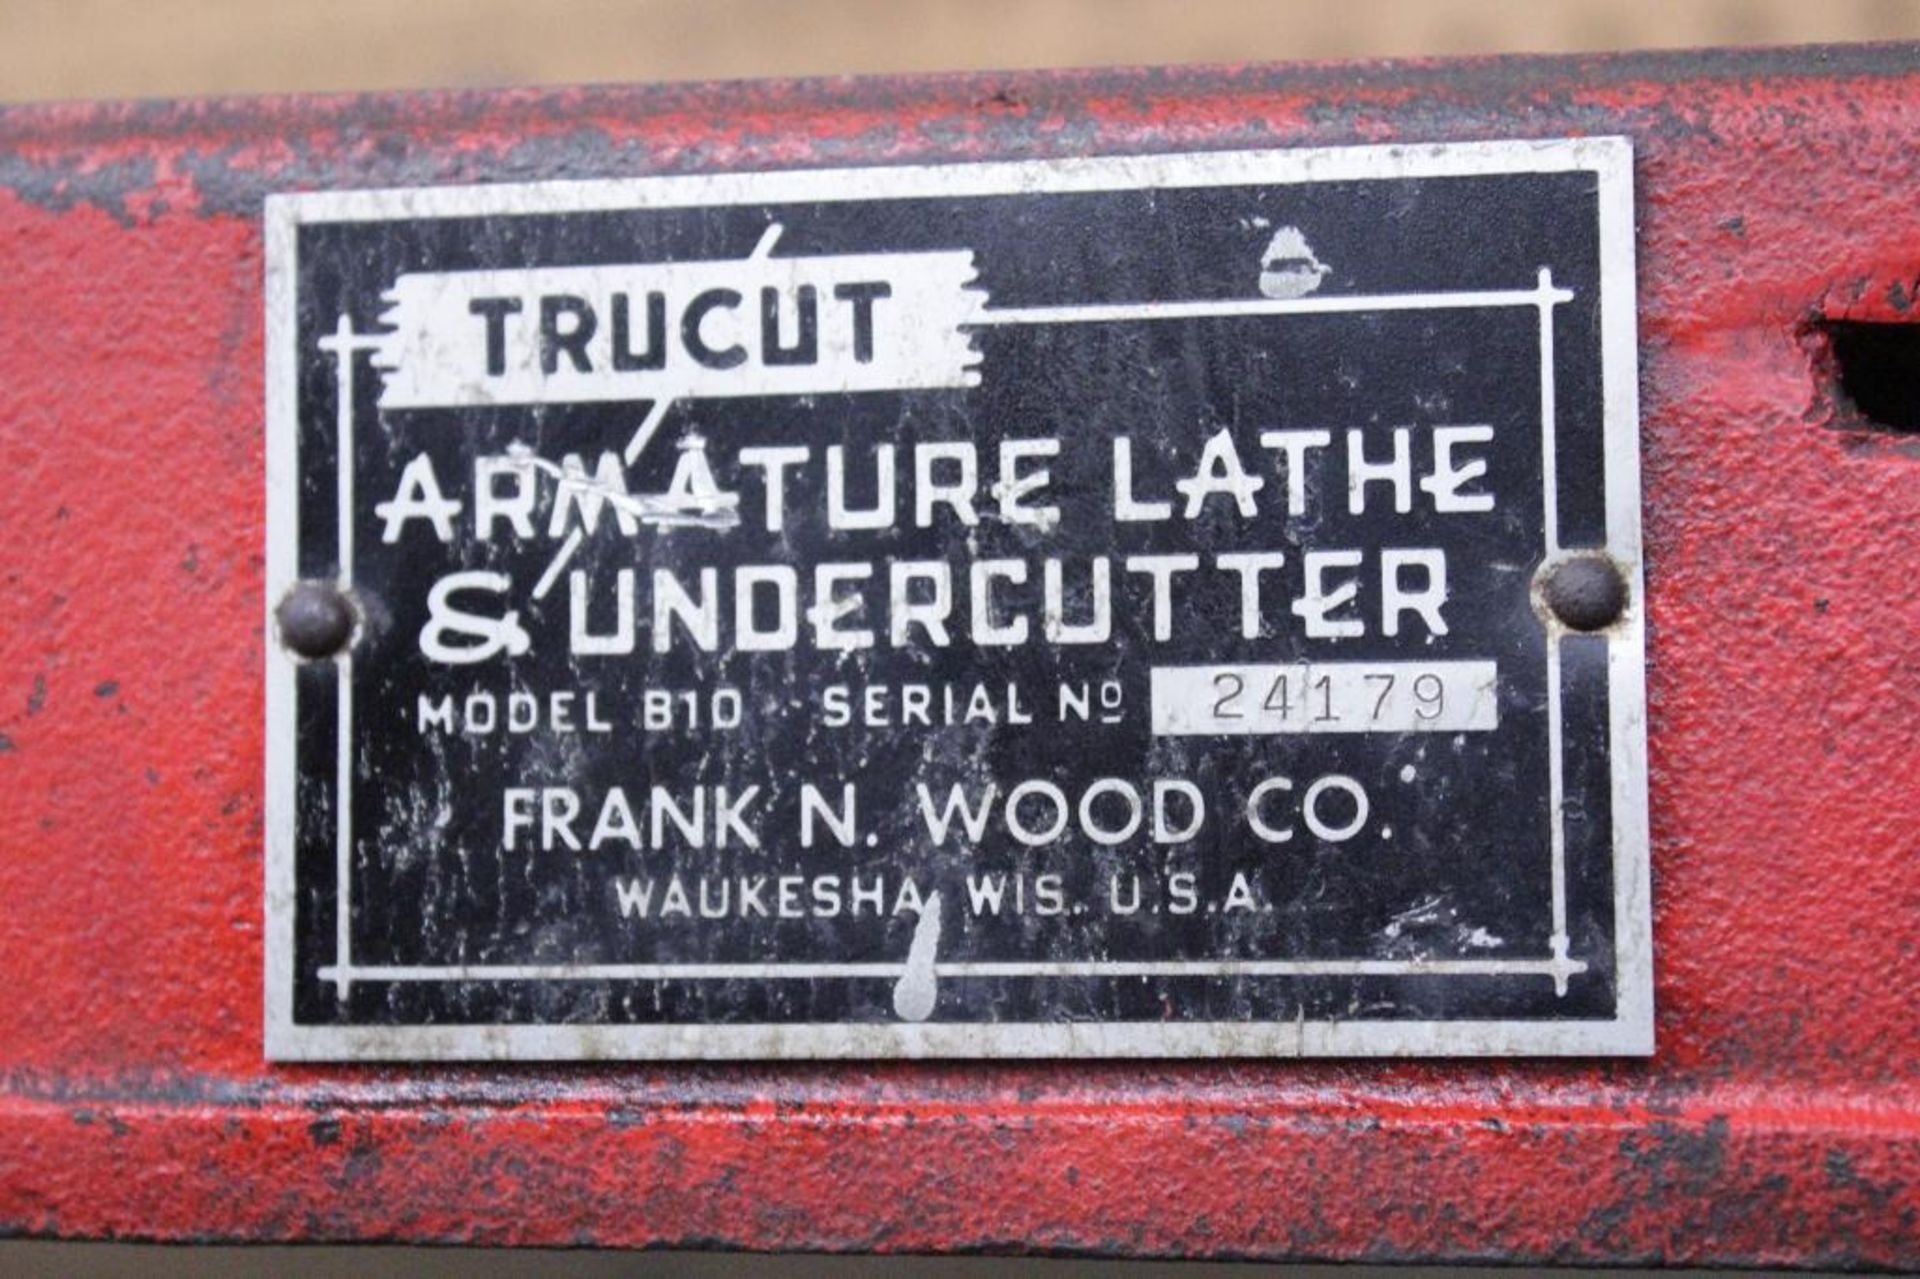 Trucut Model B10 Armature lathe & Under Cutter - Image 4 of 4